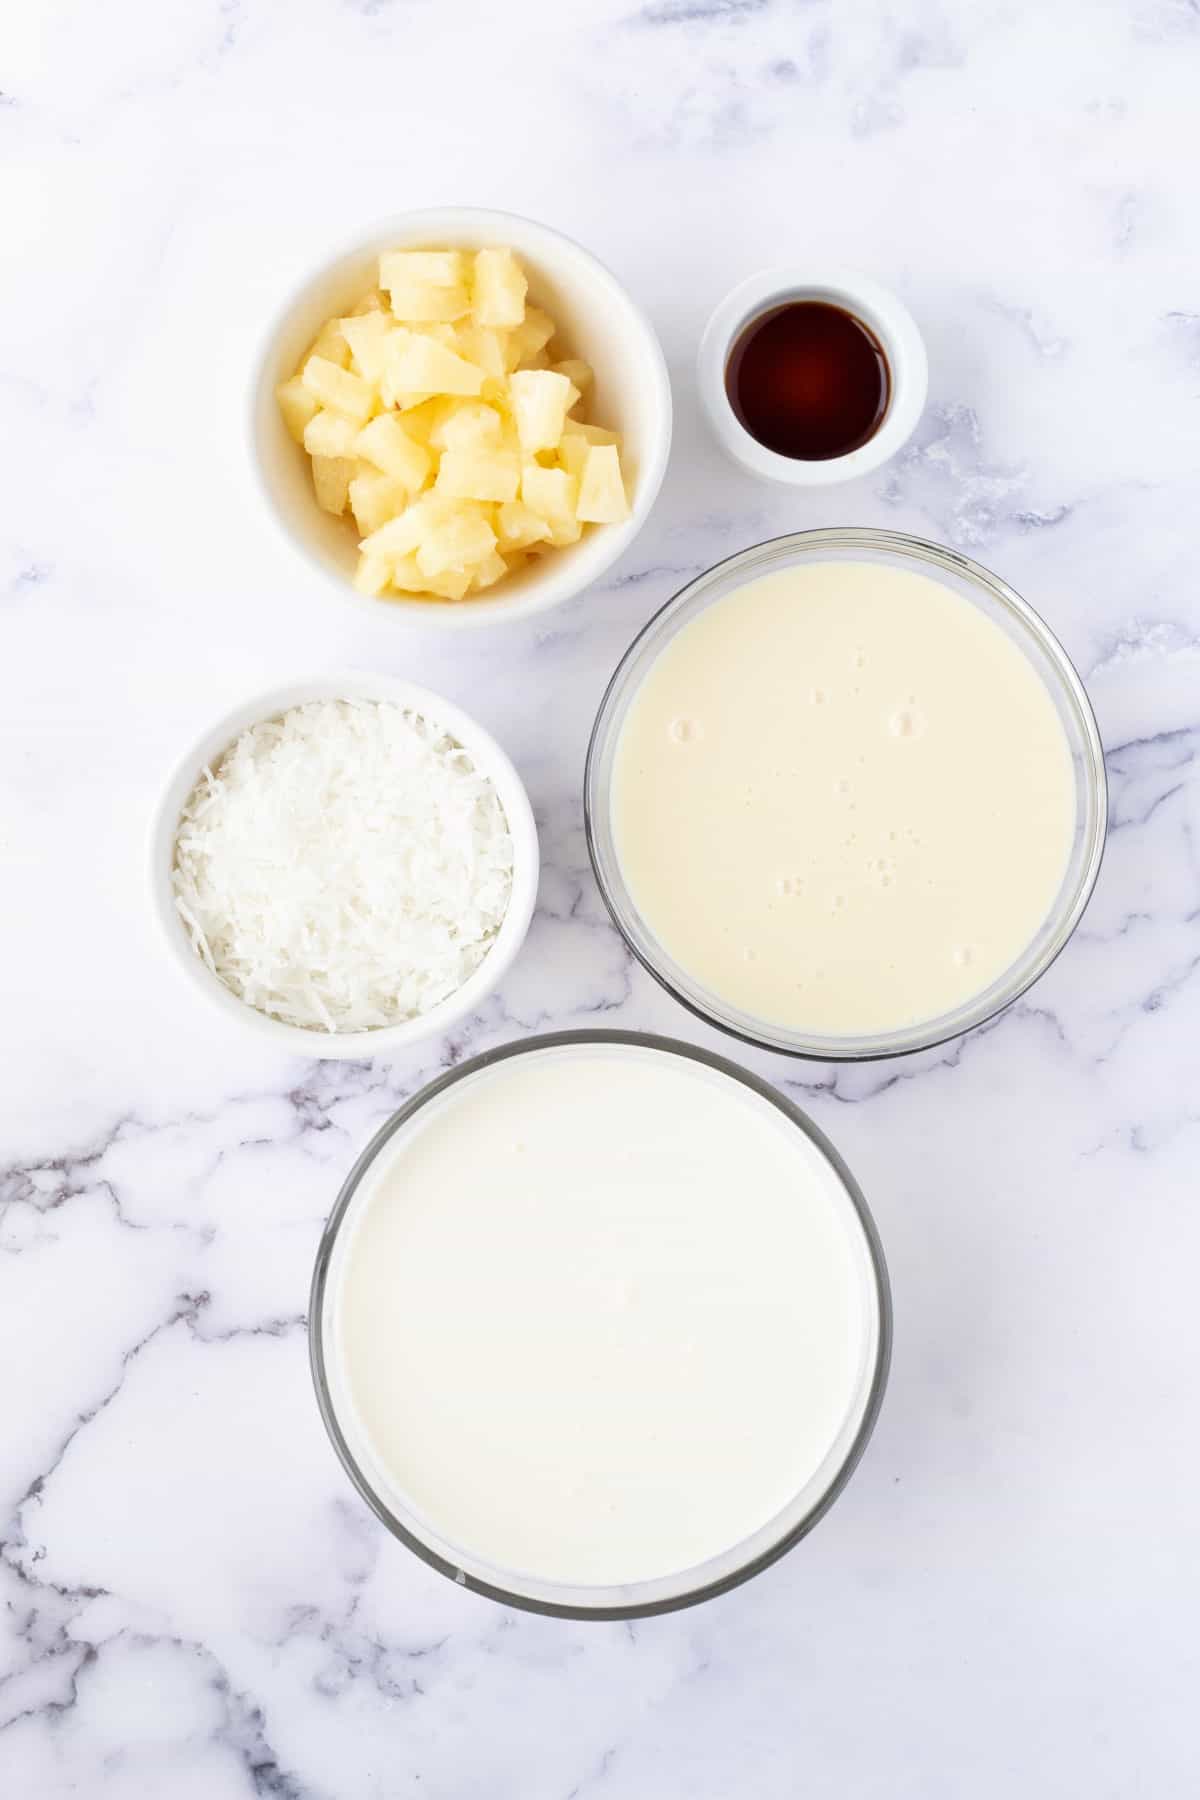 Ingredients for Pineapple Coconut Ice Cream